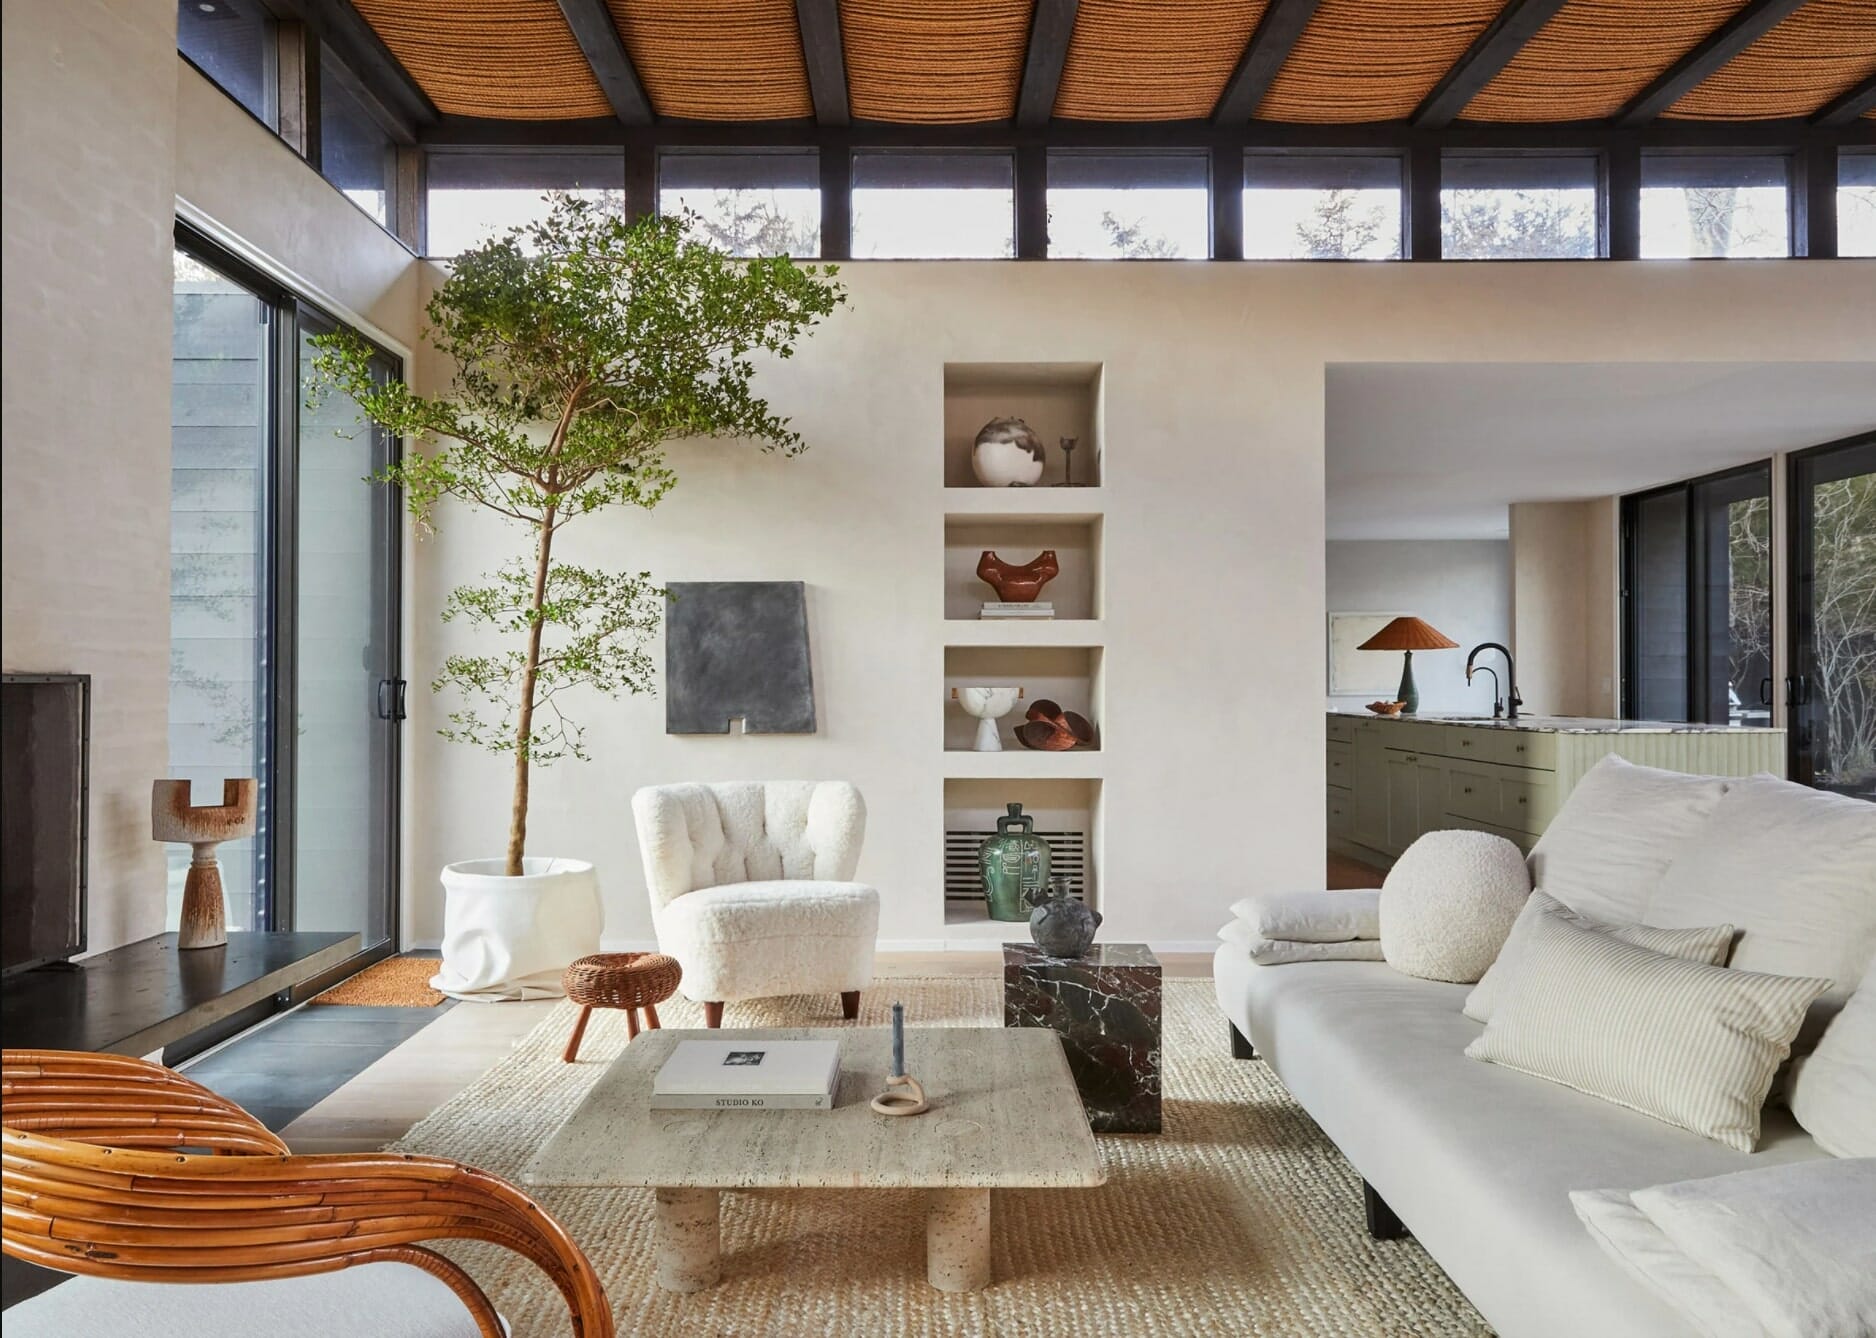 Interior Design Trends 20 20 Top Looks from Experts   Decorilla